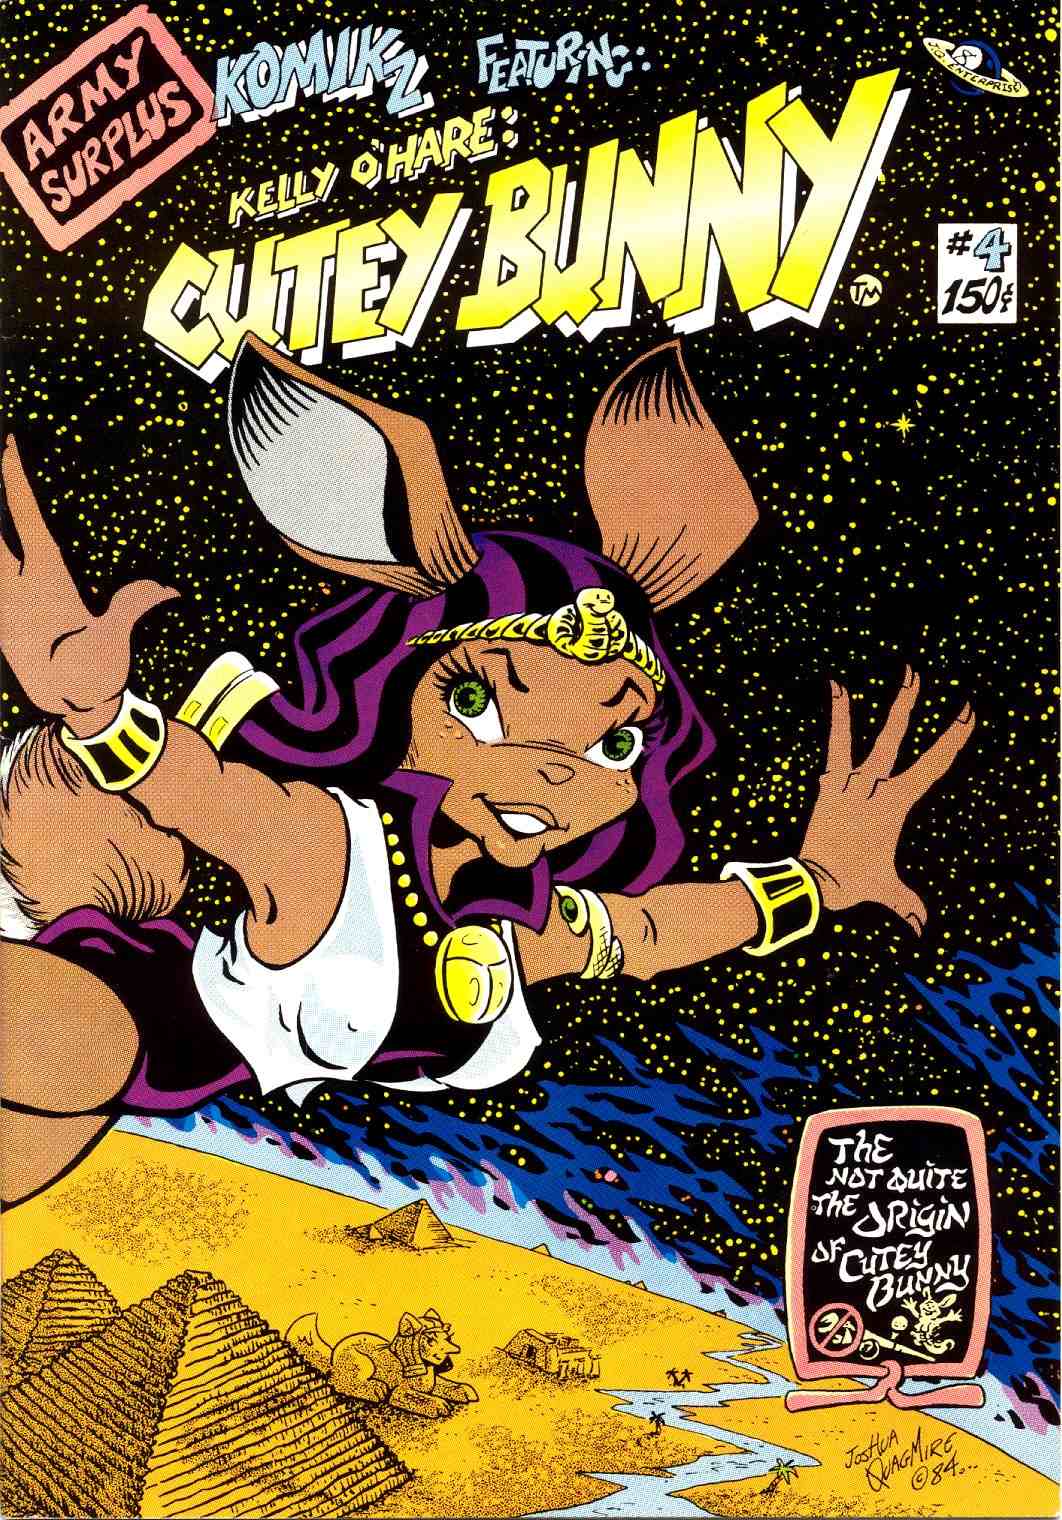 Read online Army  Surplus Komikz Featuring: Cutey Bunny comic -  Issue #4 - 1